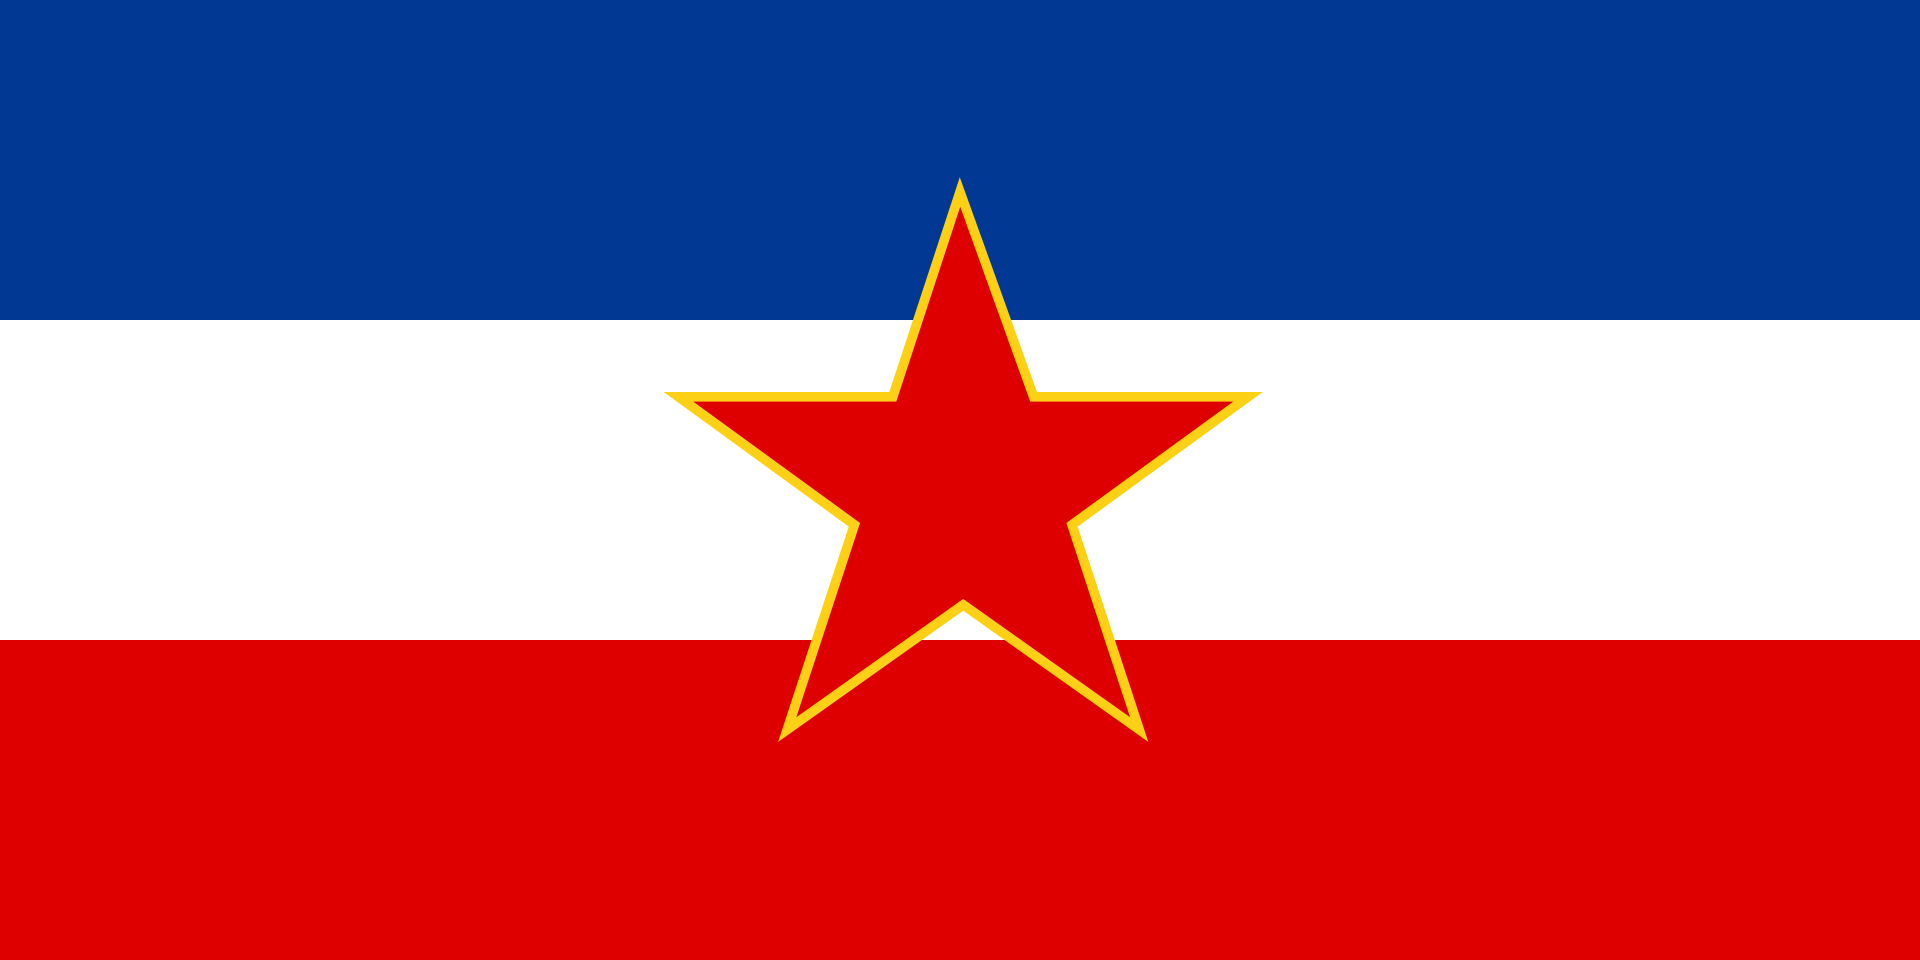 Socialist Federal Republic of Yugoslavia - Wikipedia